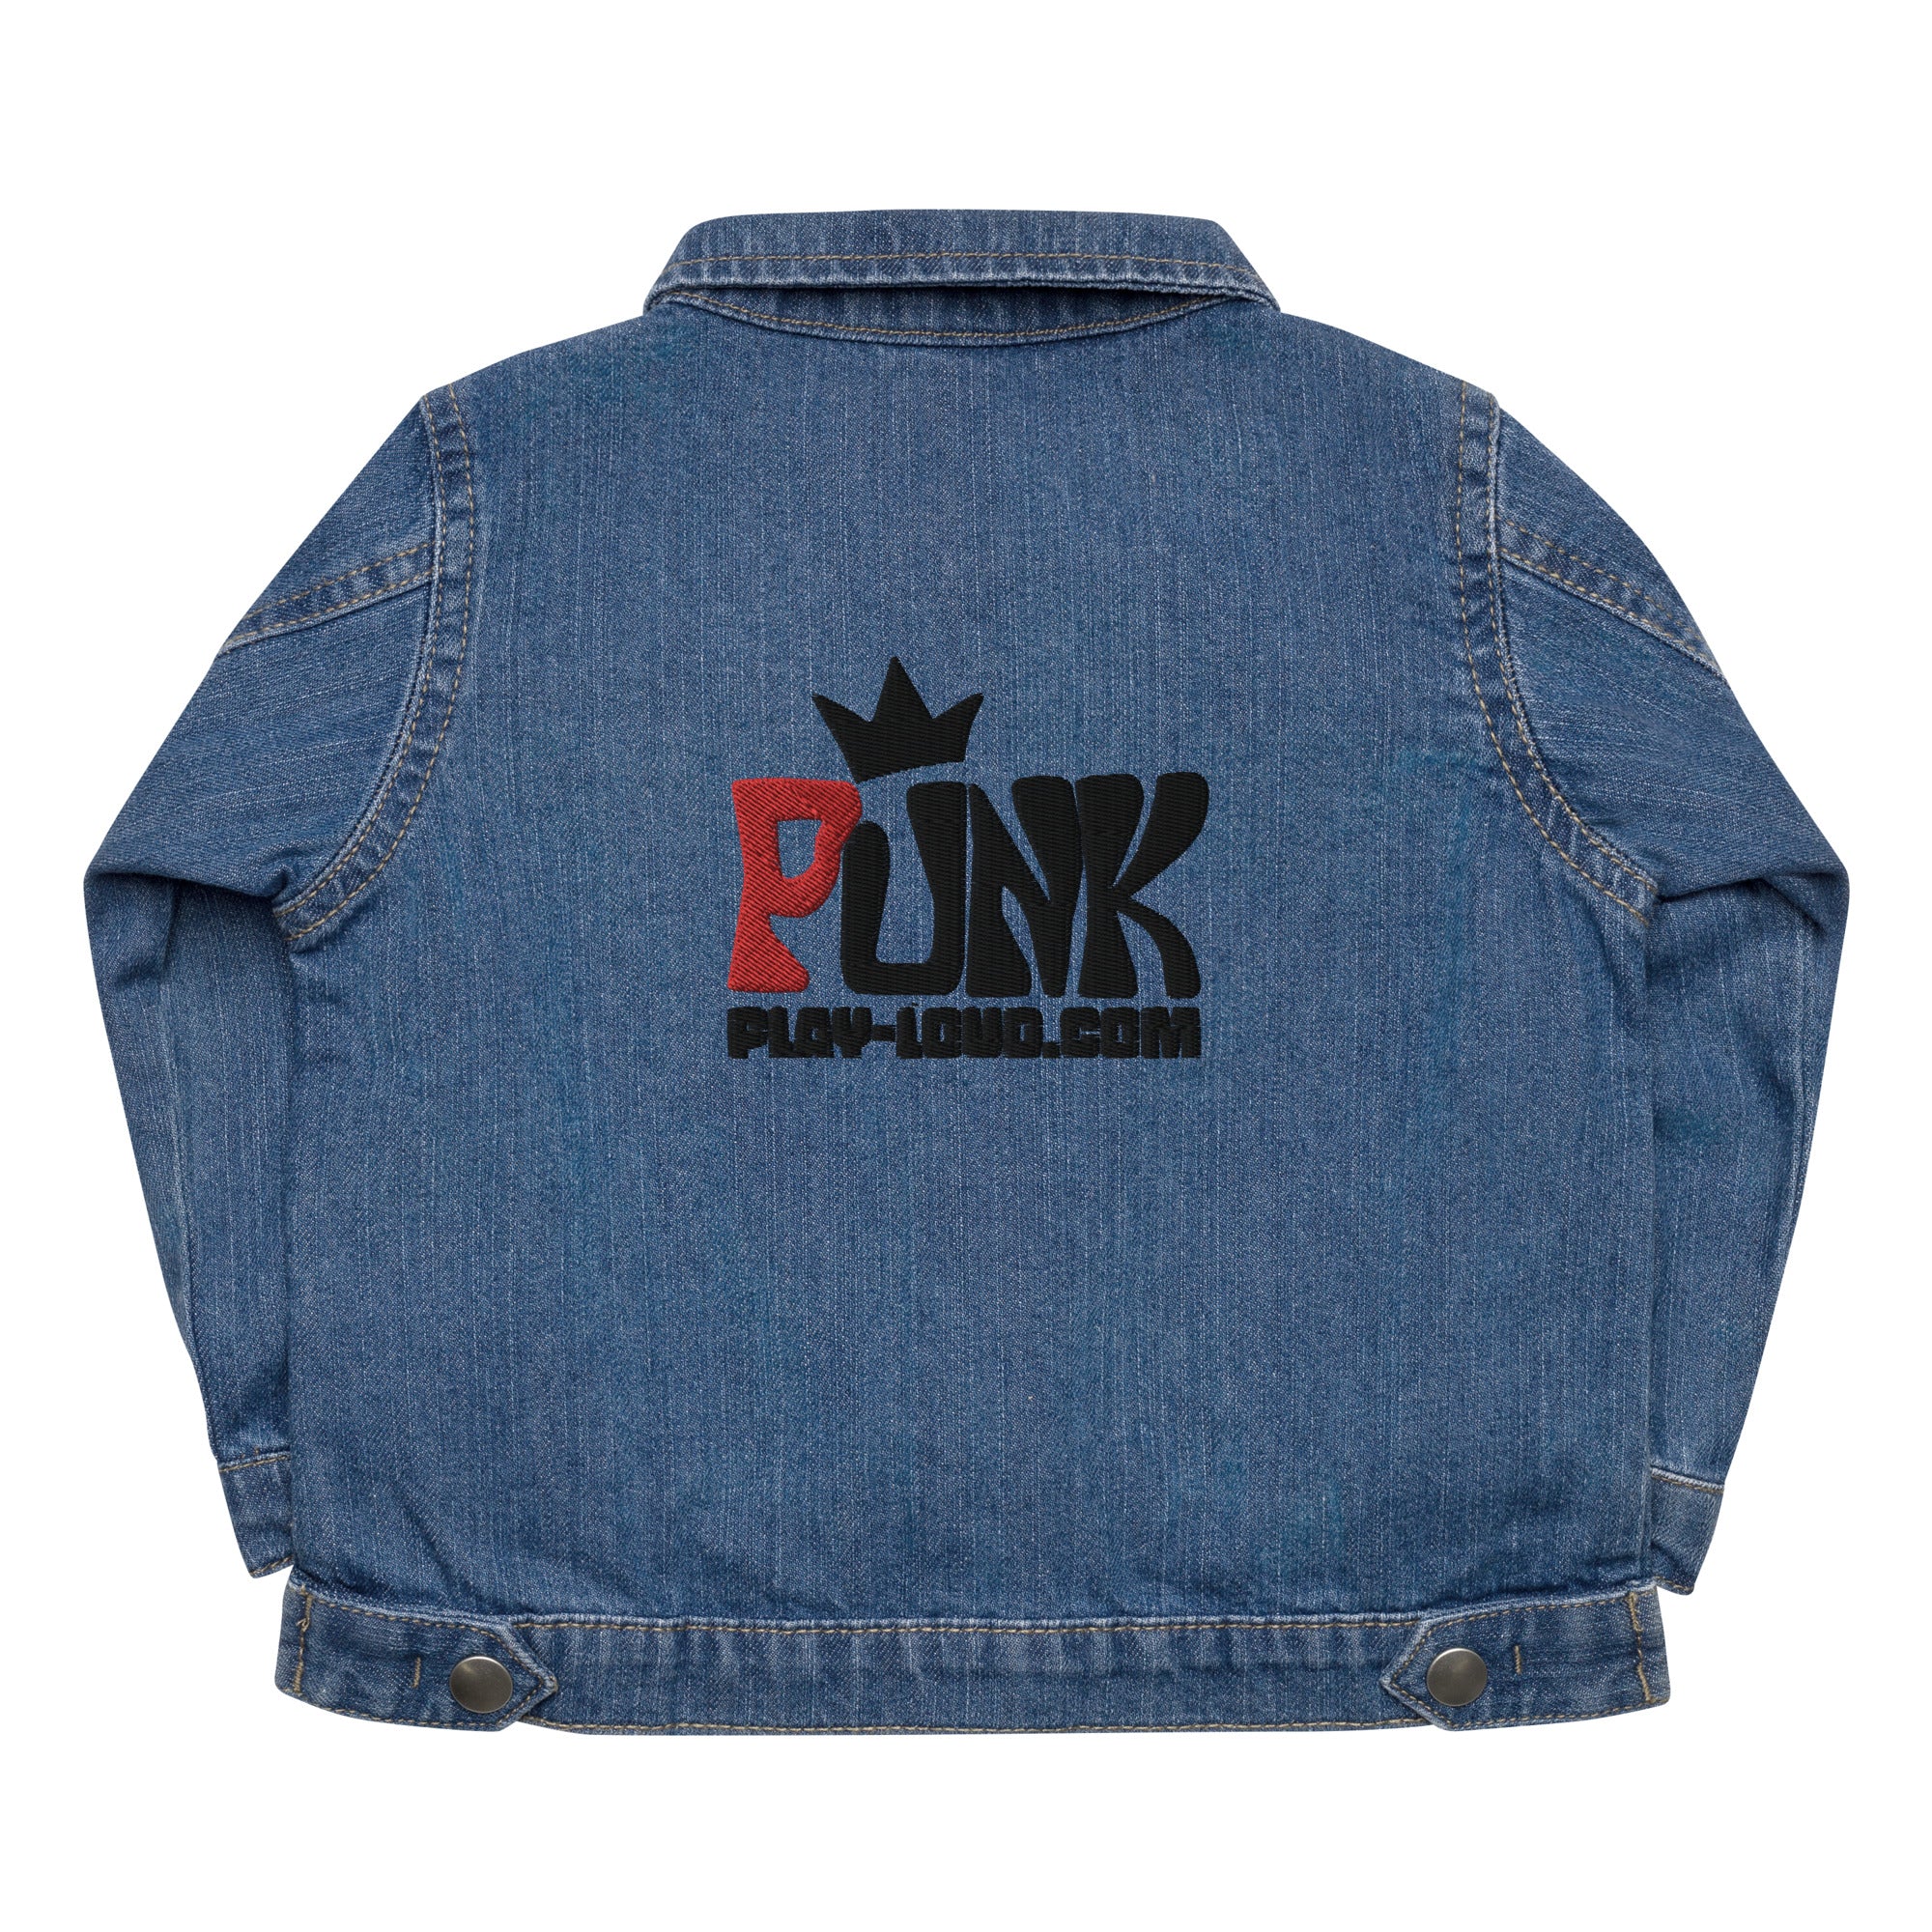 Punk embroidered organic jacket